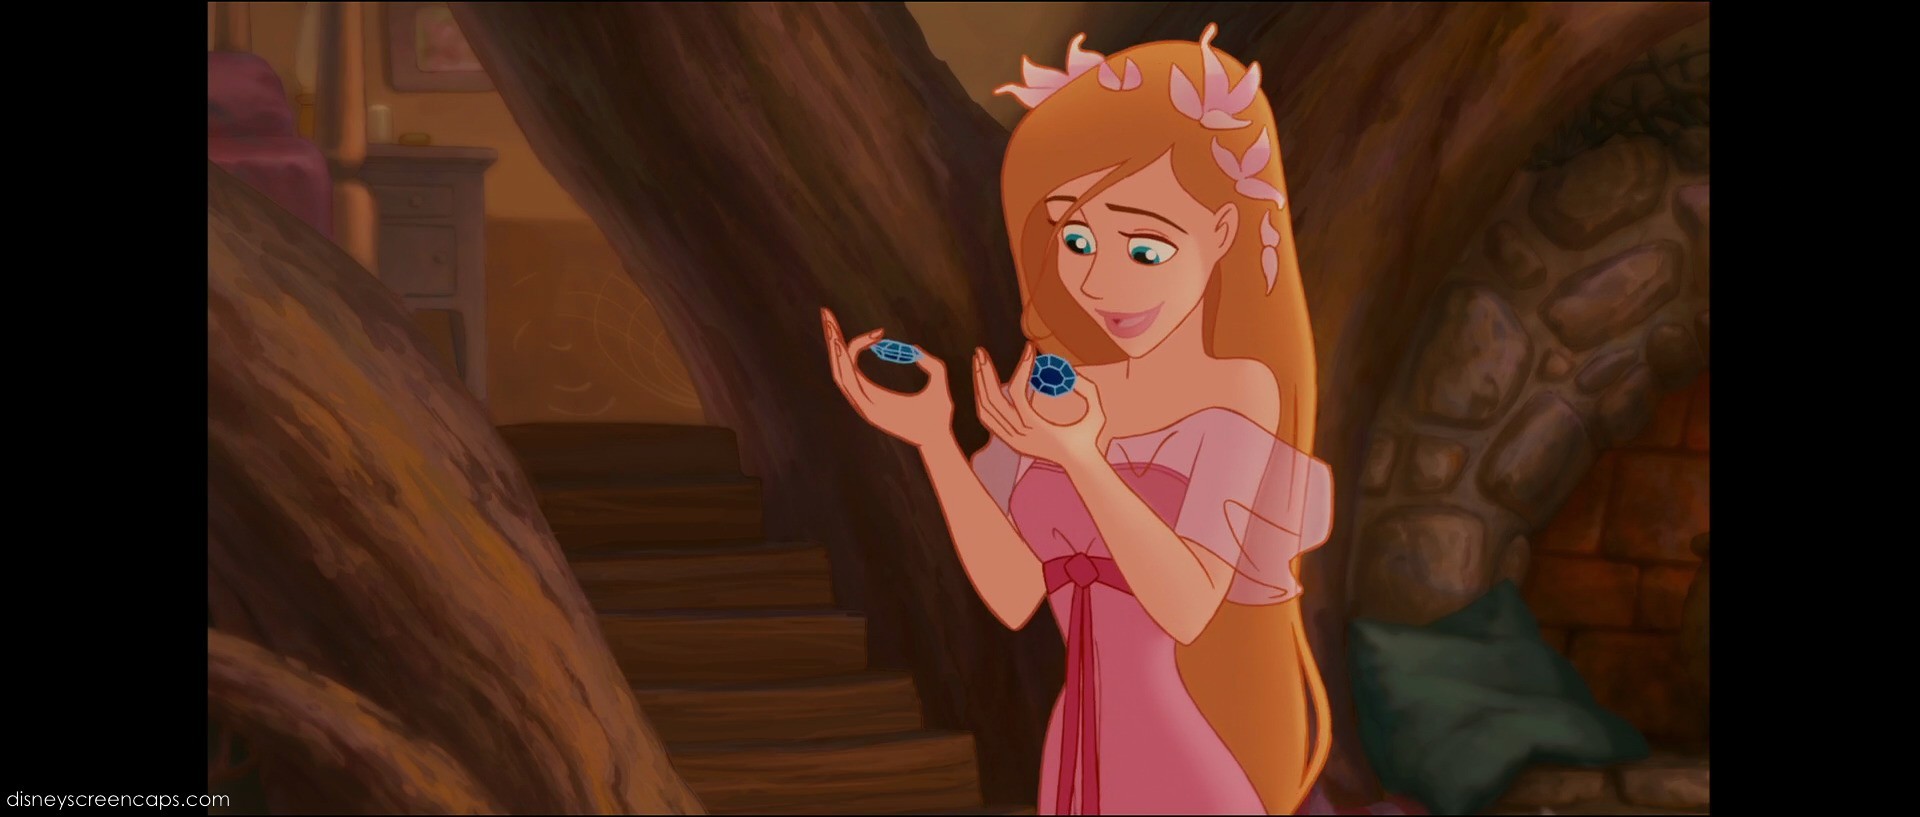 Sad tumblr disney princess #princesasdisney